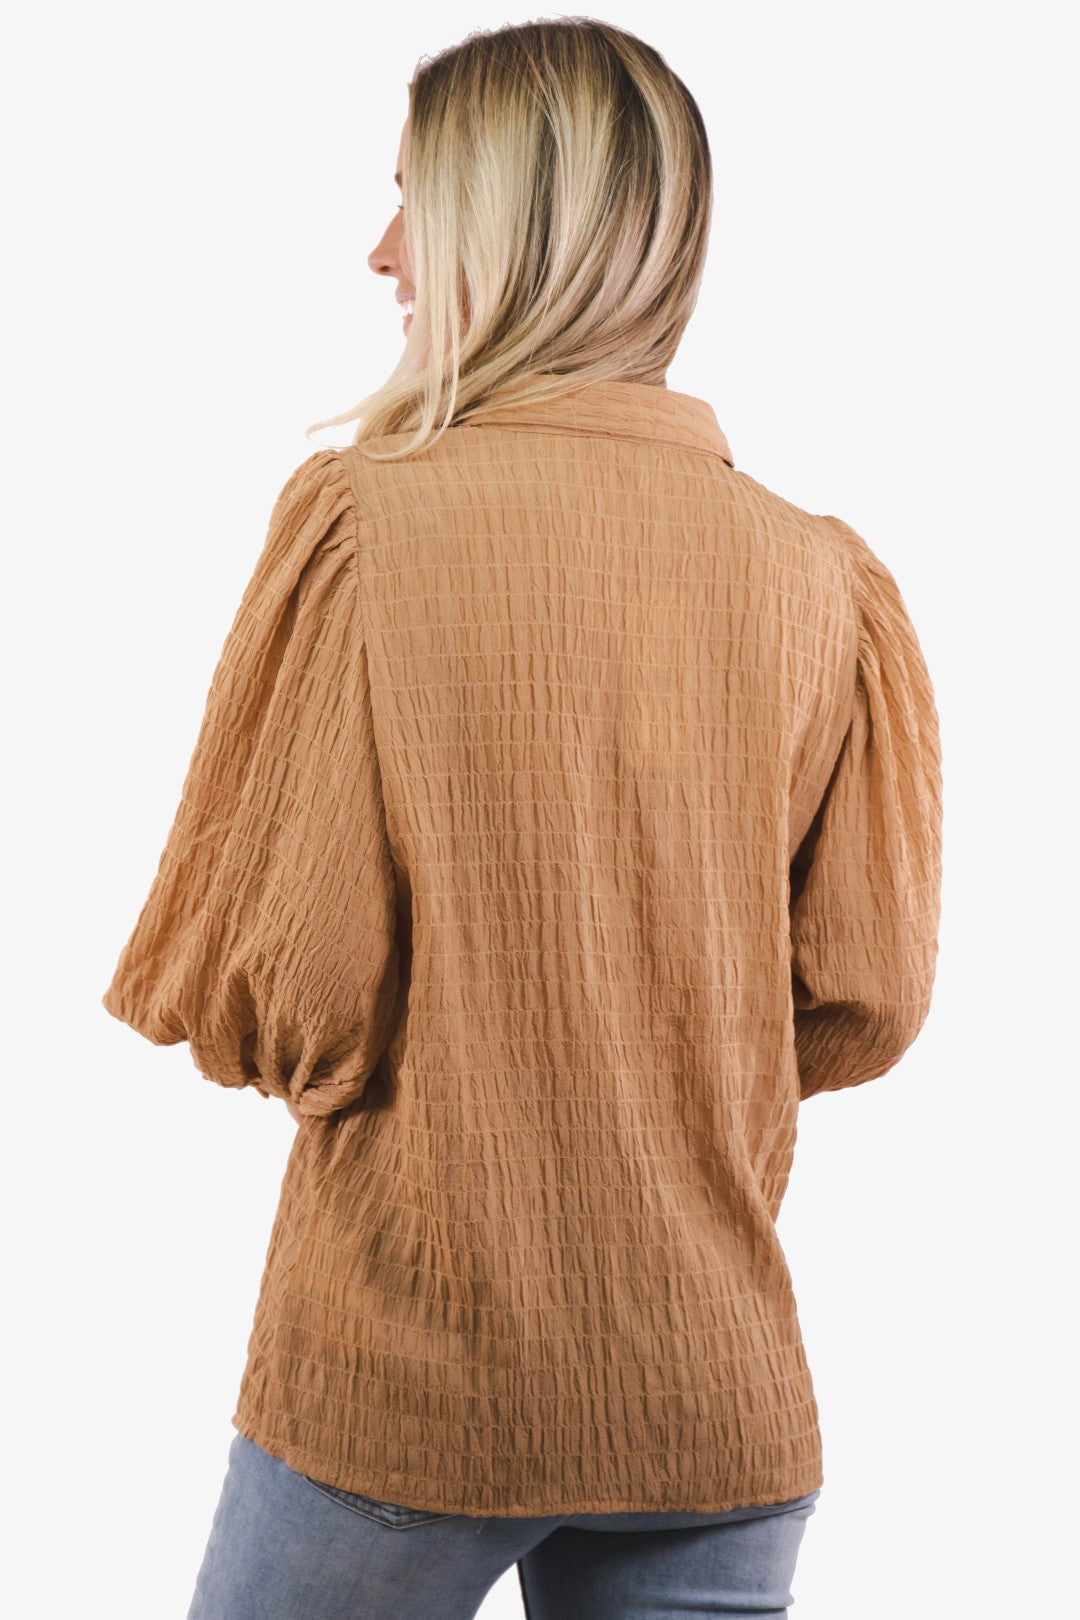 Esqualo blouse in Camel color